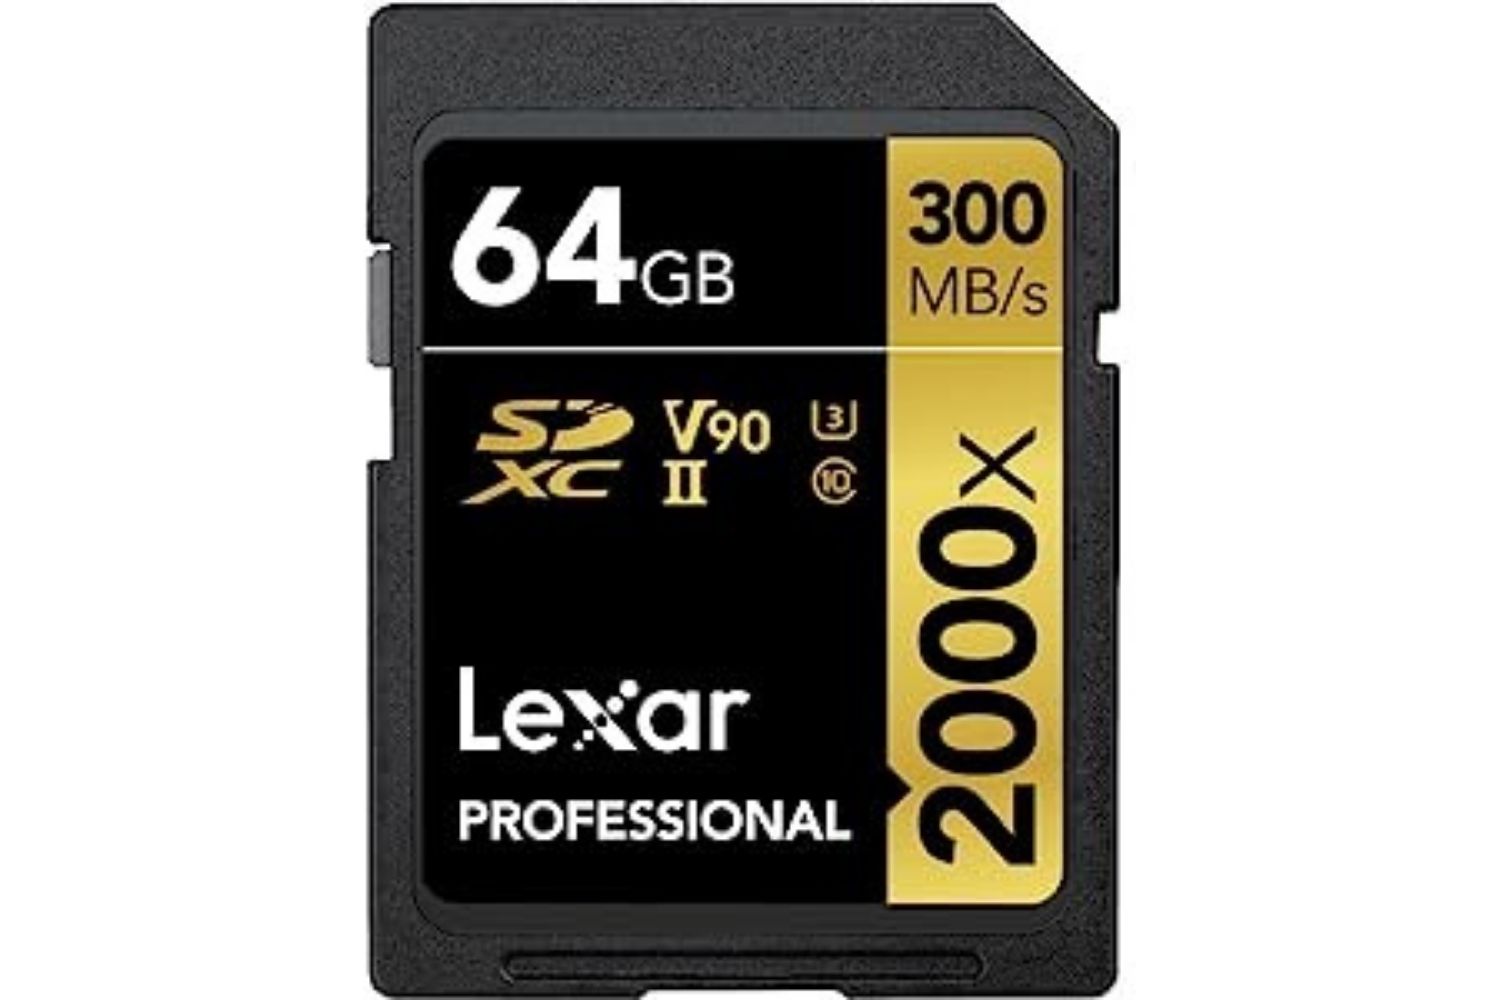  Lexar Professional 2000x 64GB SDXC UHS-II Card